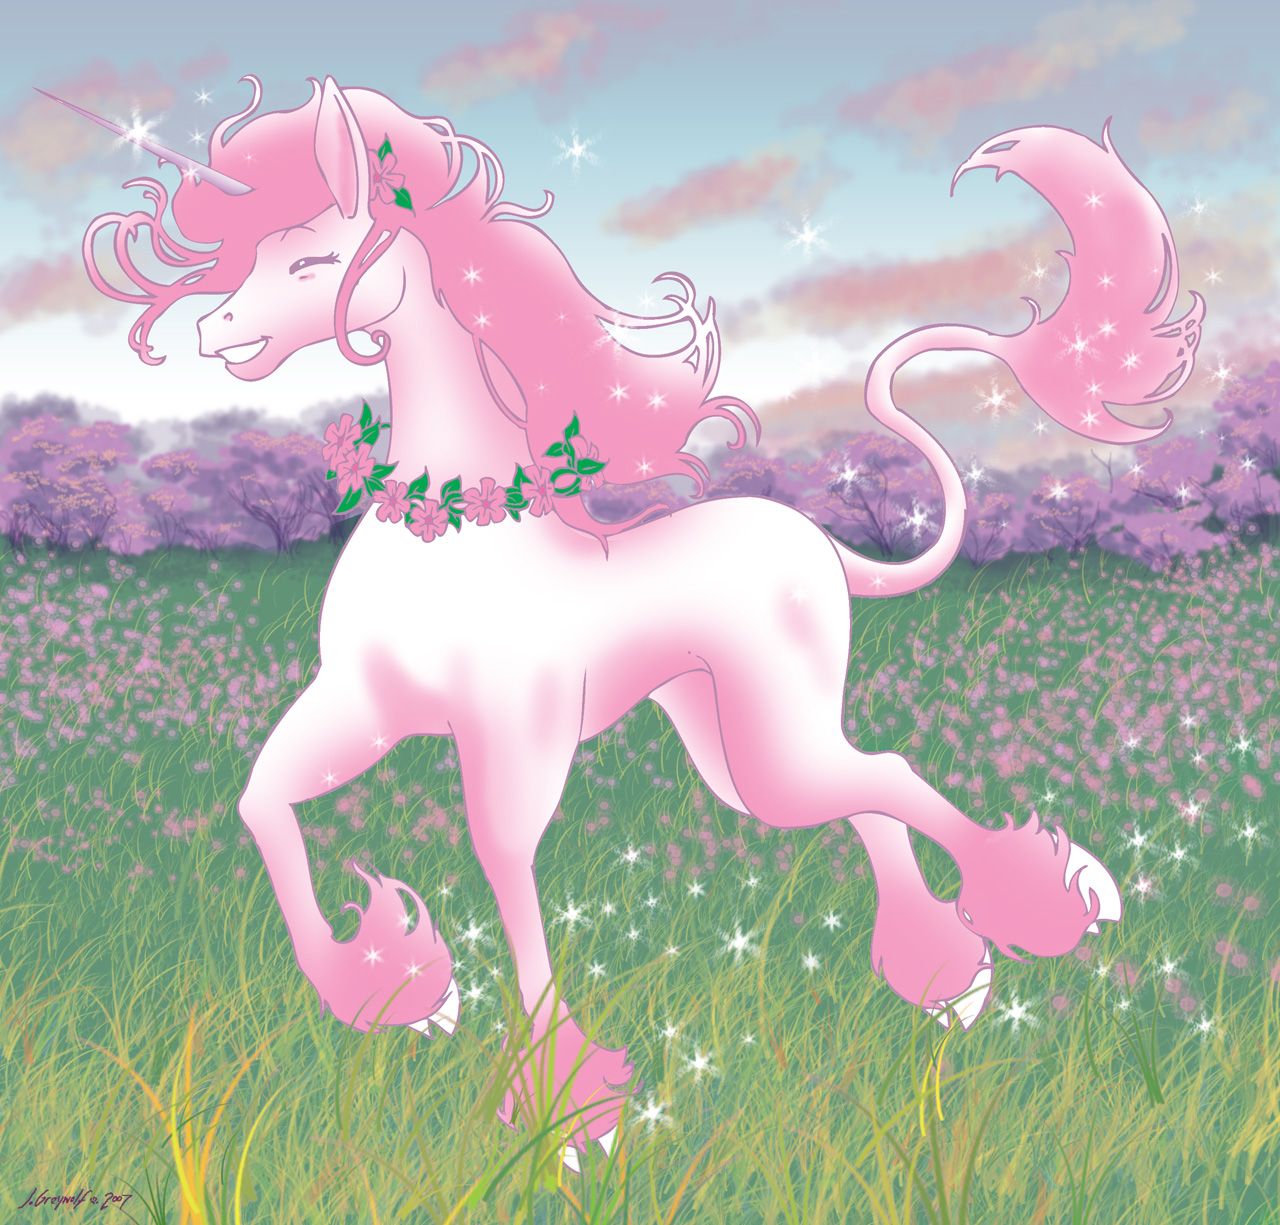 Free Unicorn Wallpaper, Download Free Unicorn Wallpaper, Kawaii Unicorn... 